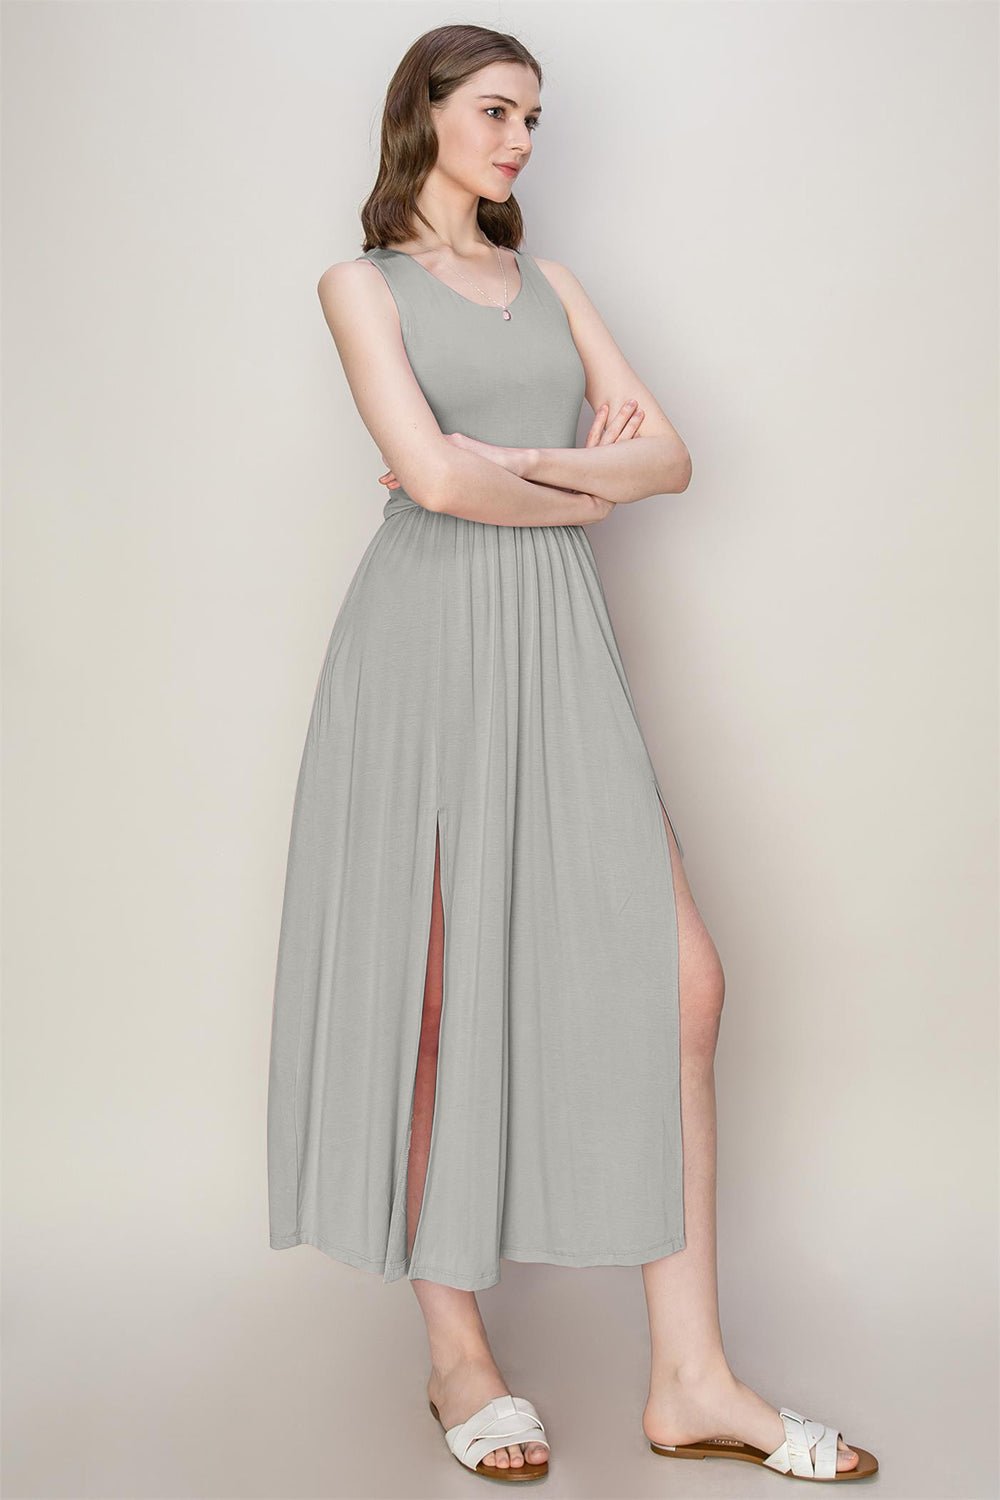 HYFVE Sleeveless Slit Midi Dress - Day Dress - Gray - Bella Bourget